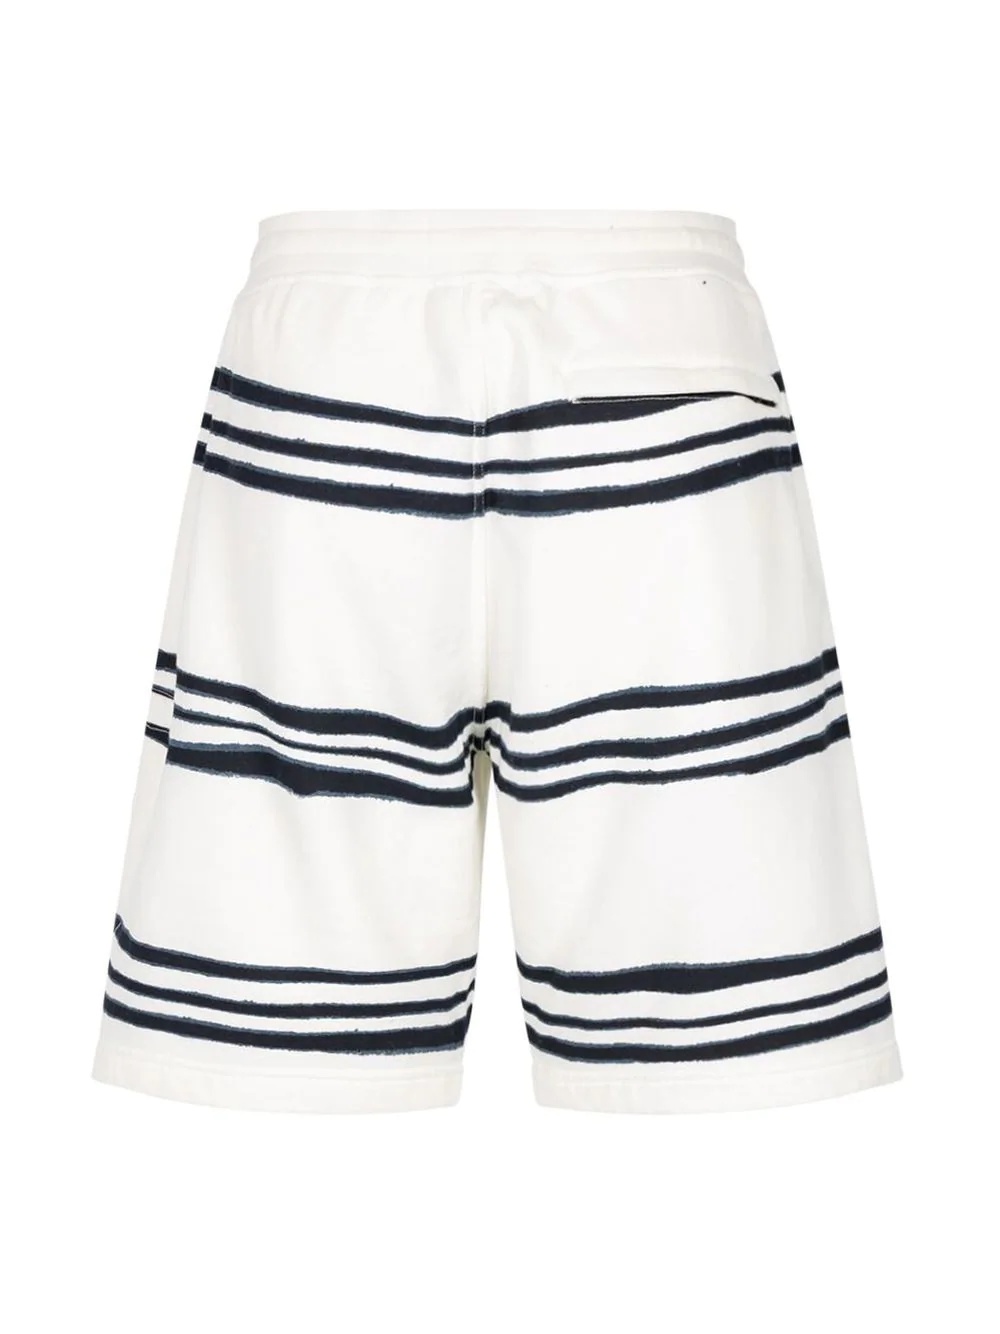 x Stone Island striped shorts - 2